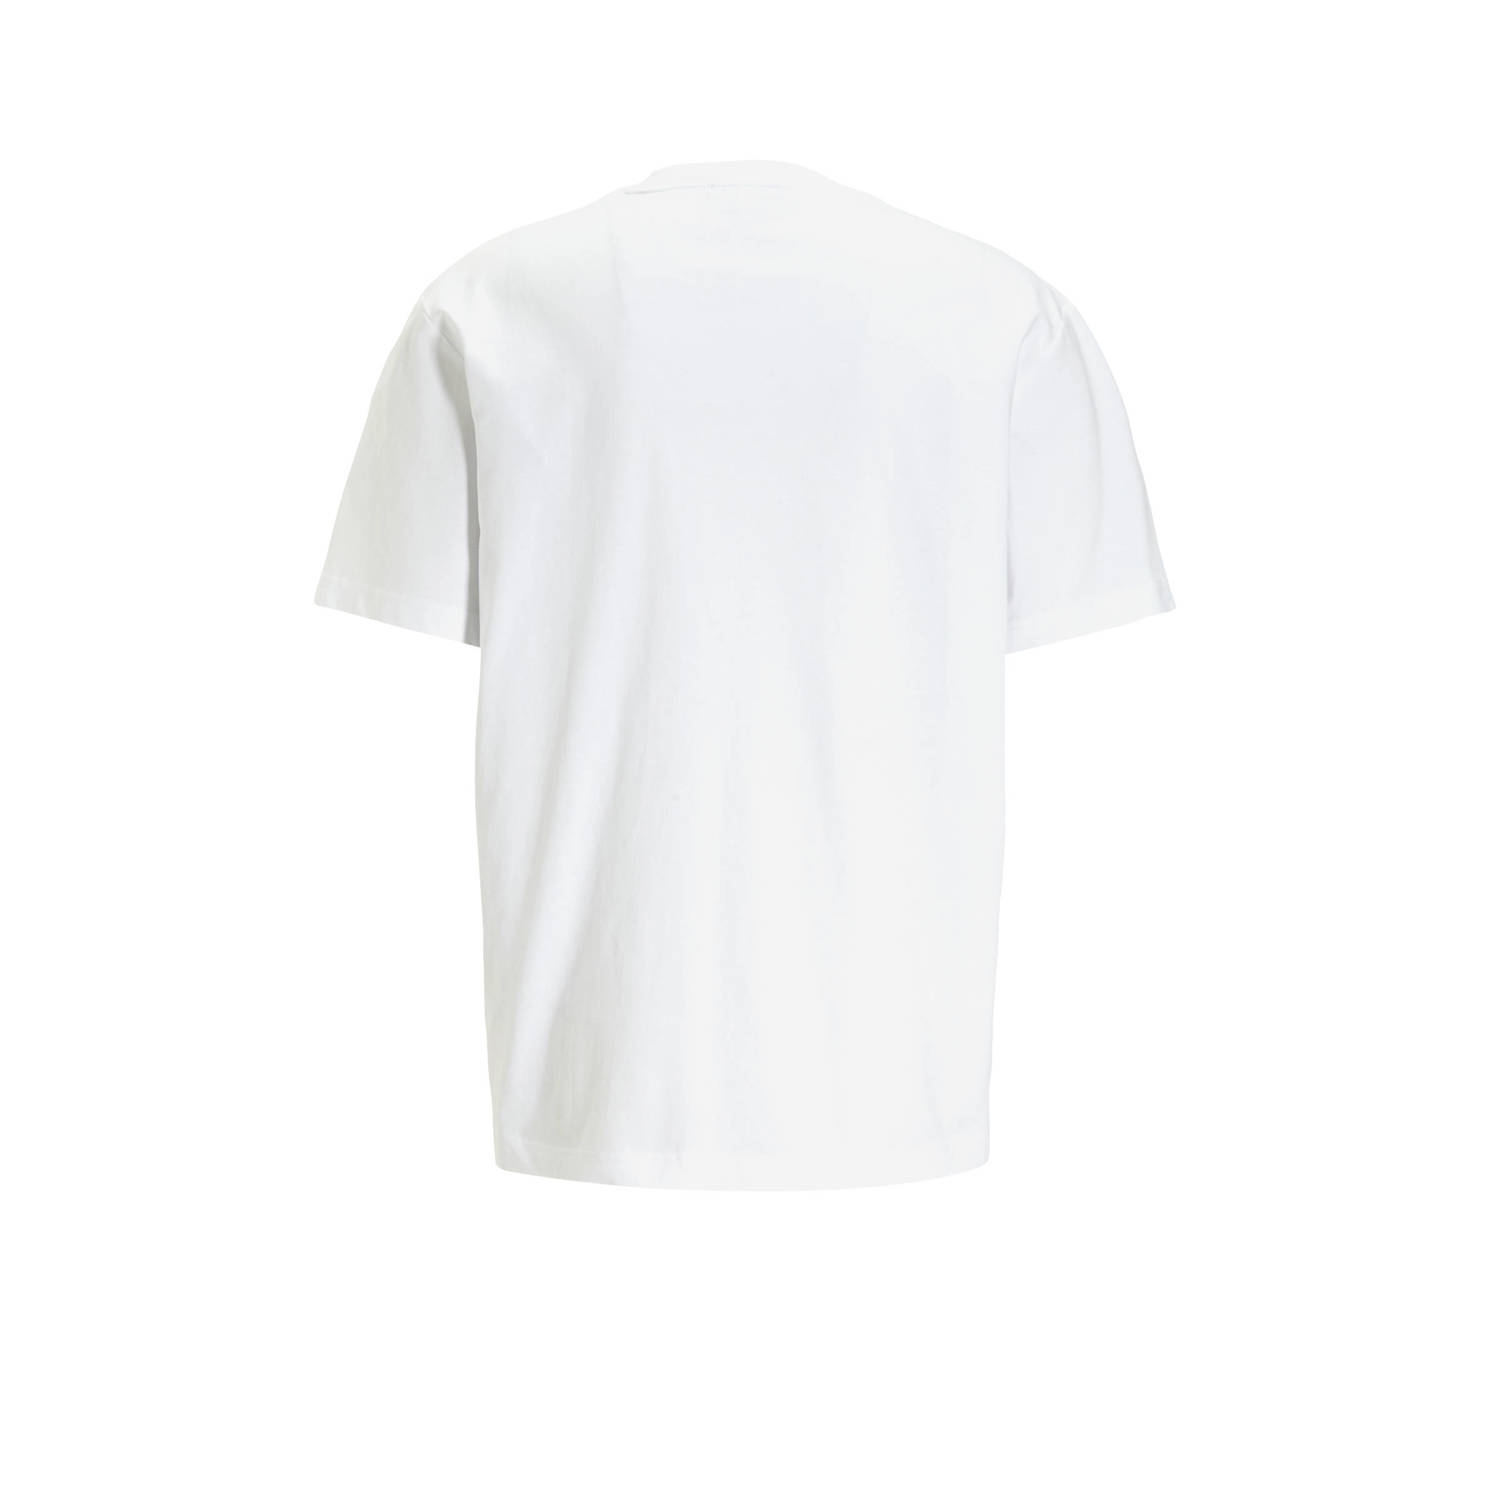 Lacoste T-shirt met logo wit